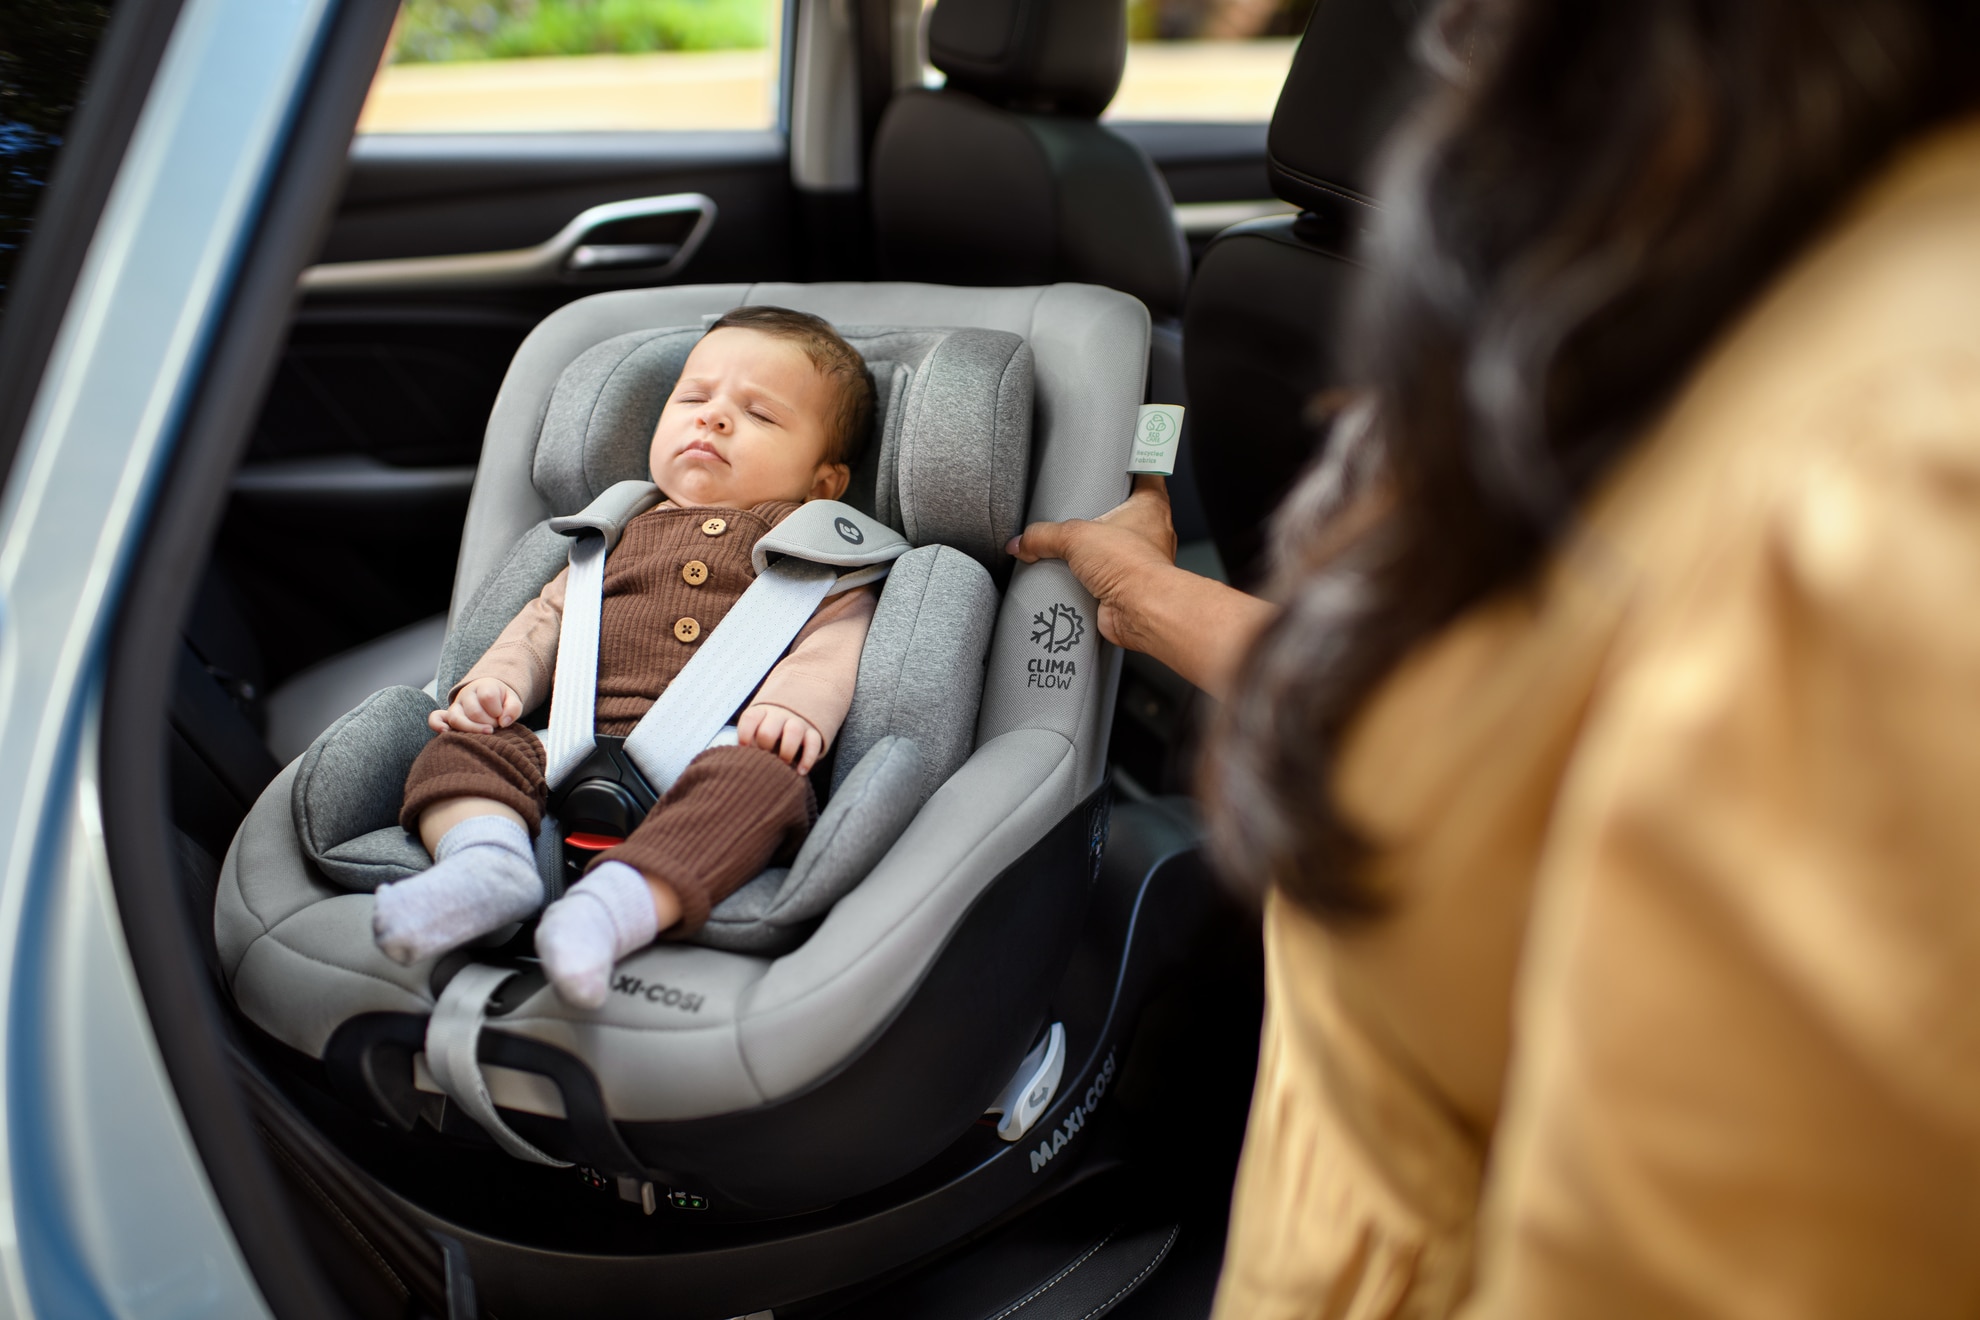 Mislukking Vloeibaar Er is behoefte aan Rotating Maxi-Cosi car seats - convenience & safety combined